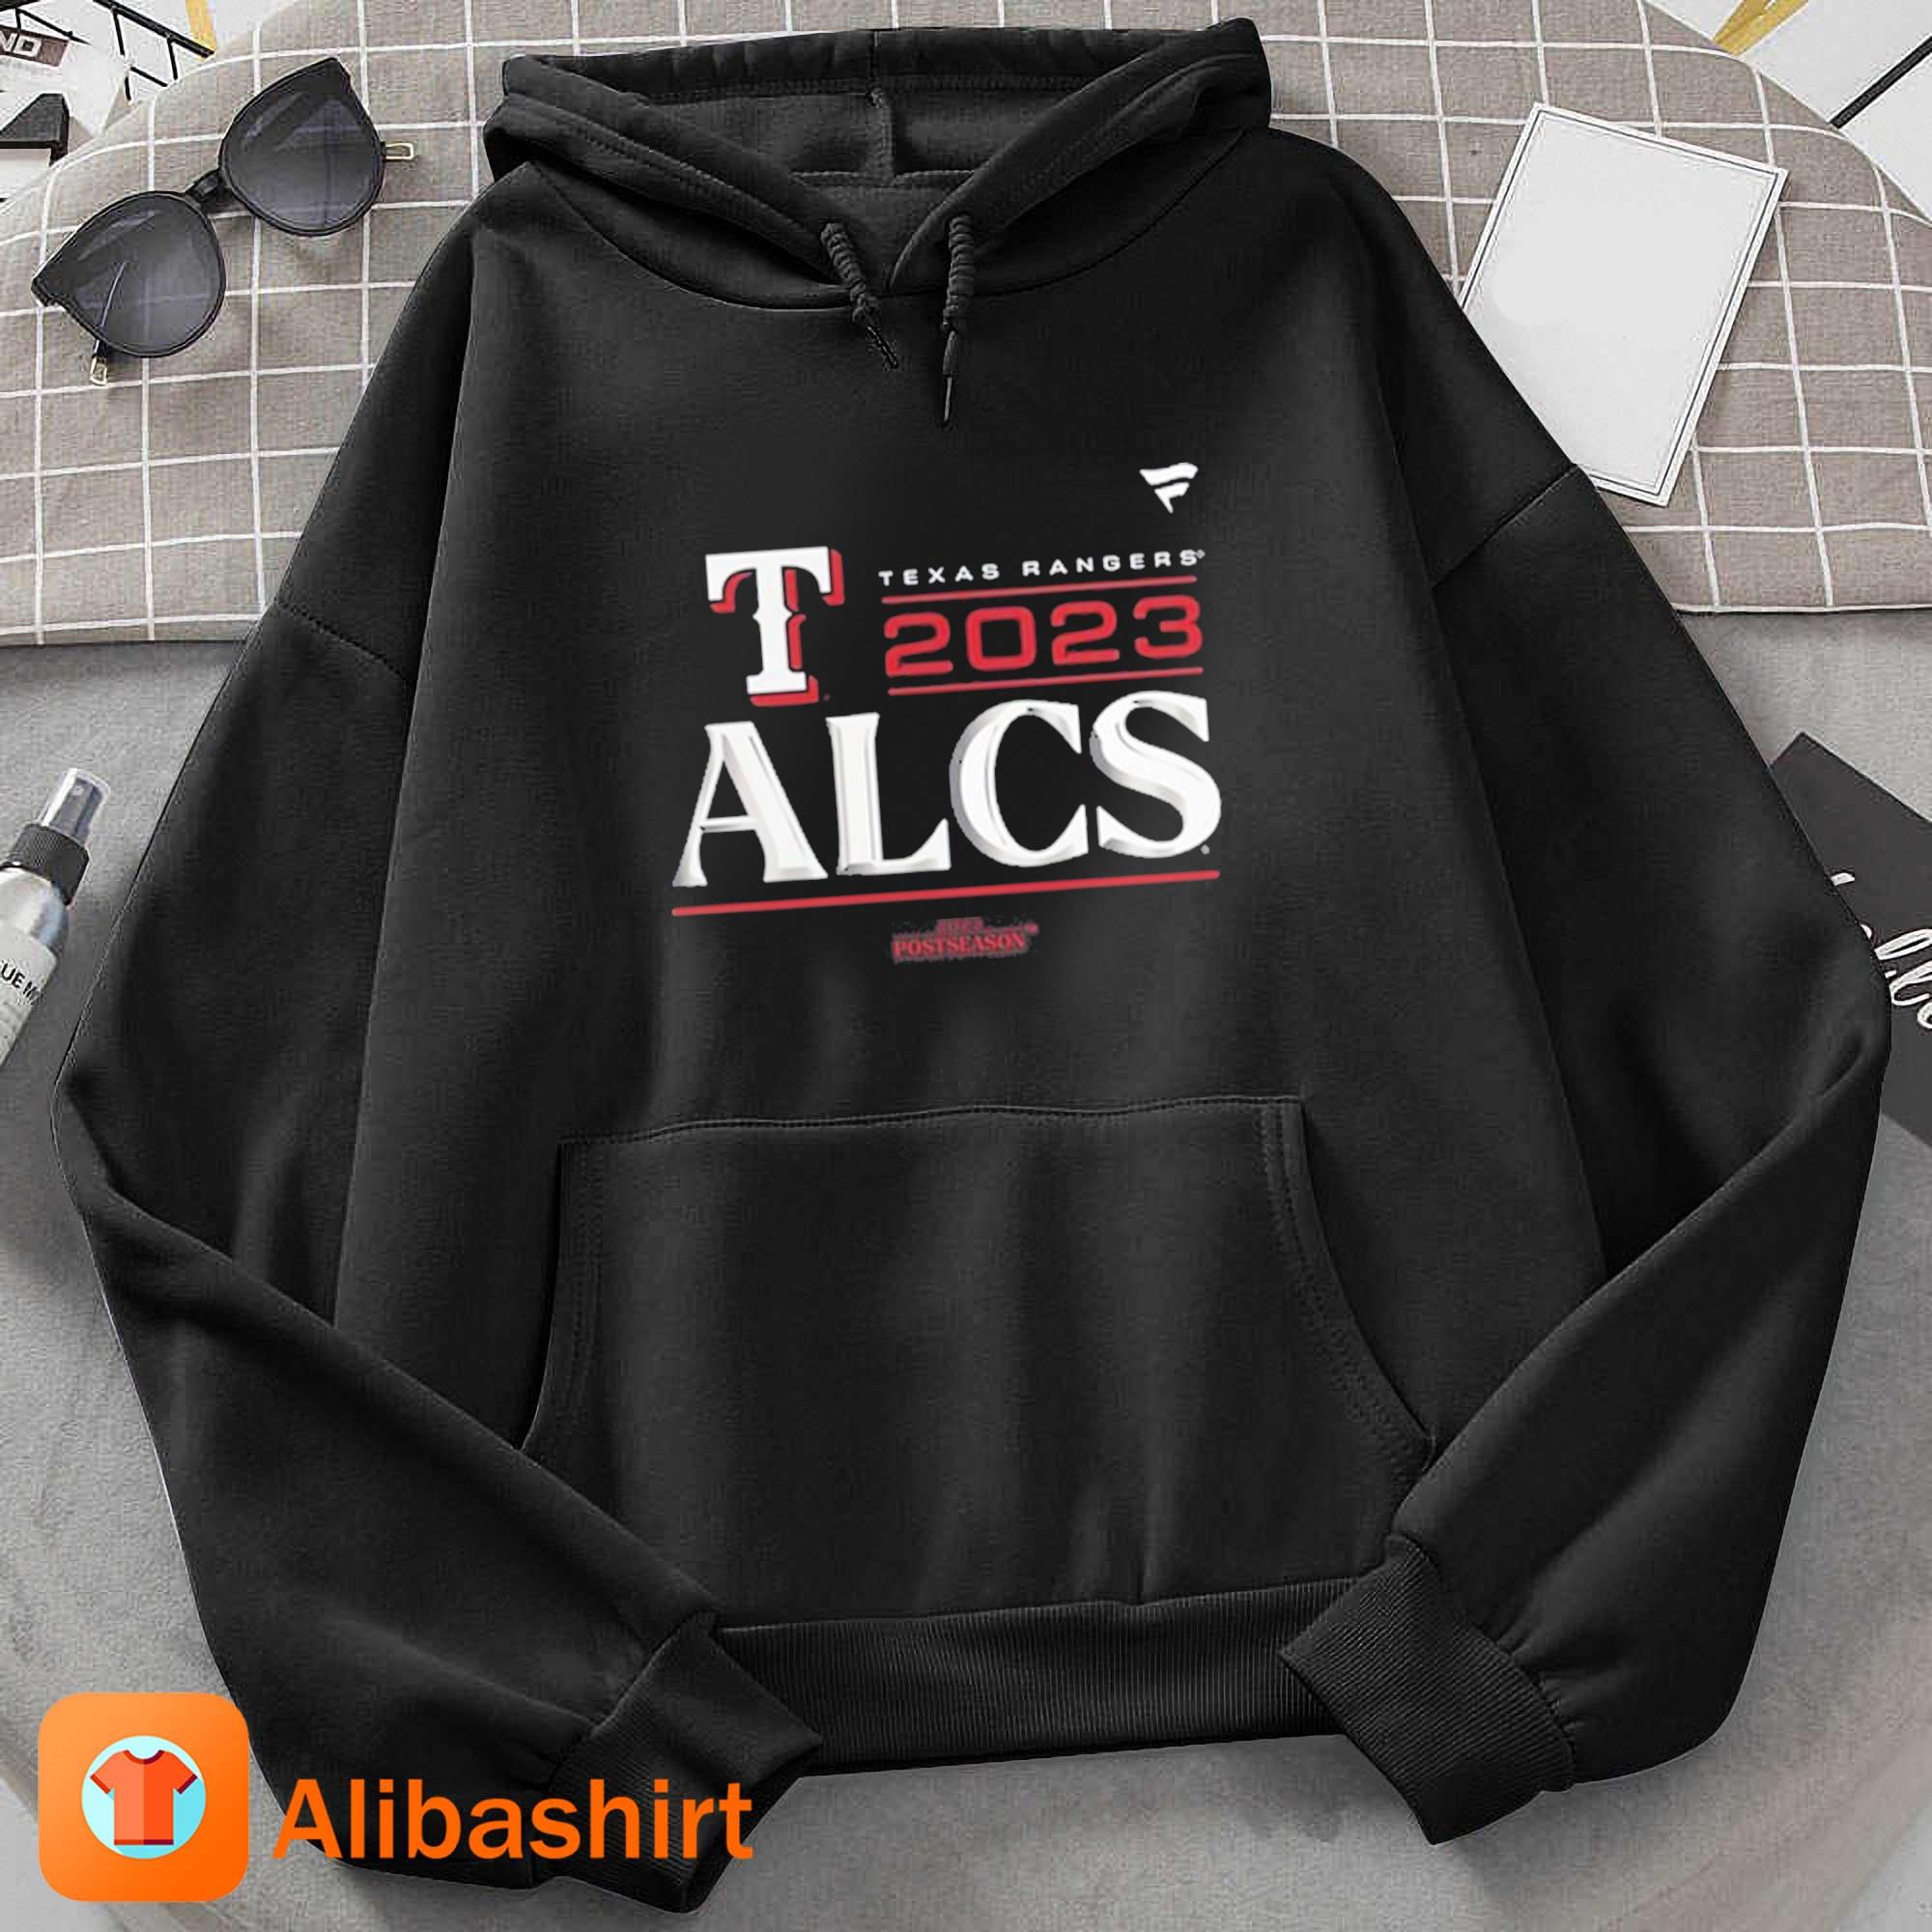 Texas Rangers Wins Baltimore Orioles 2023 ALCS T Shirt, hoodie